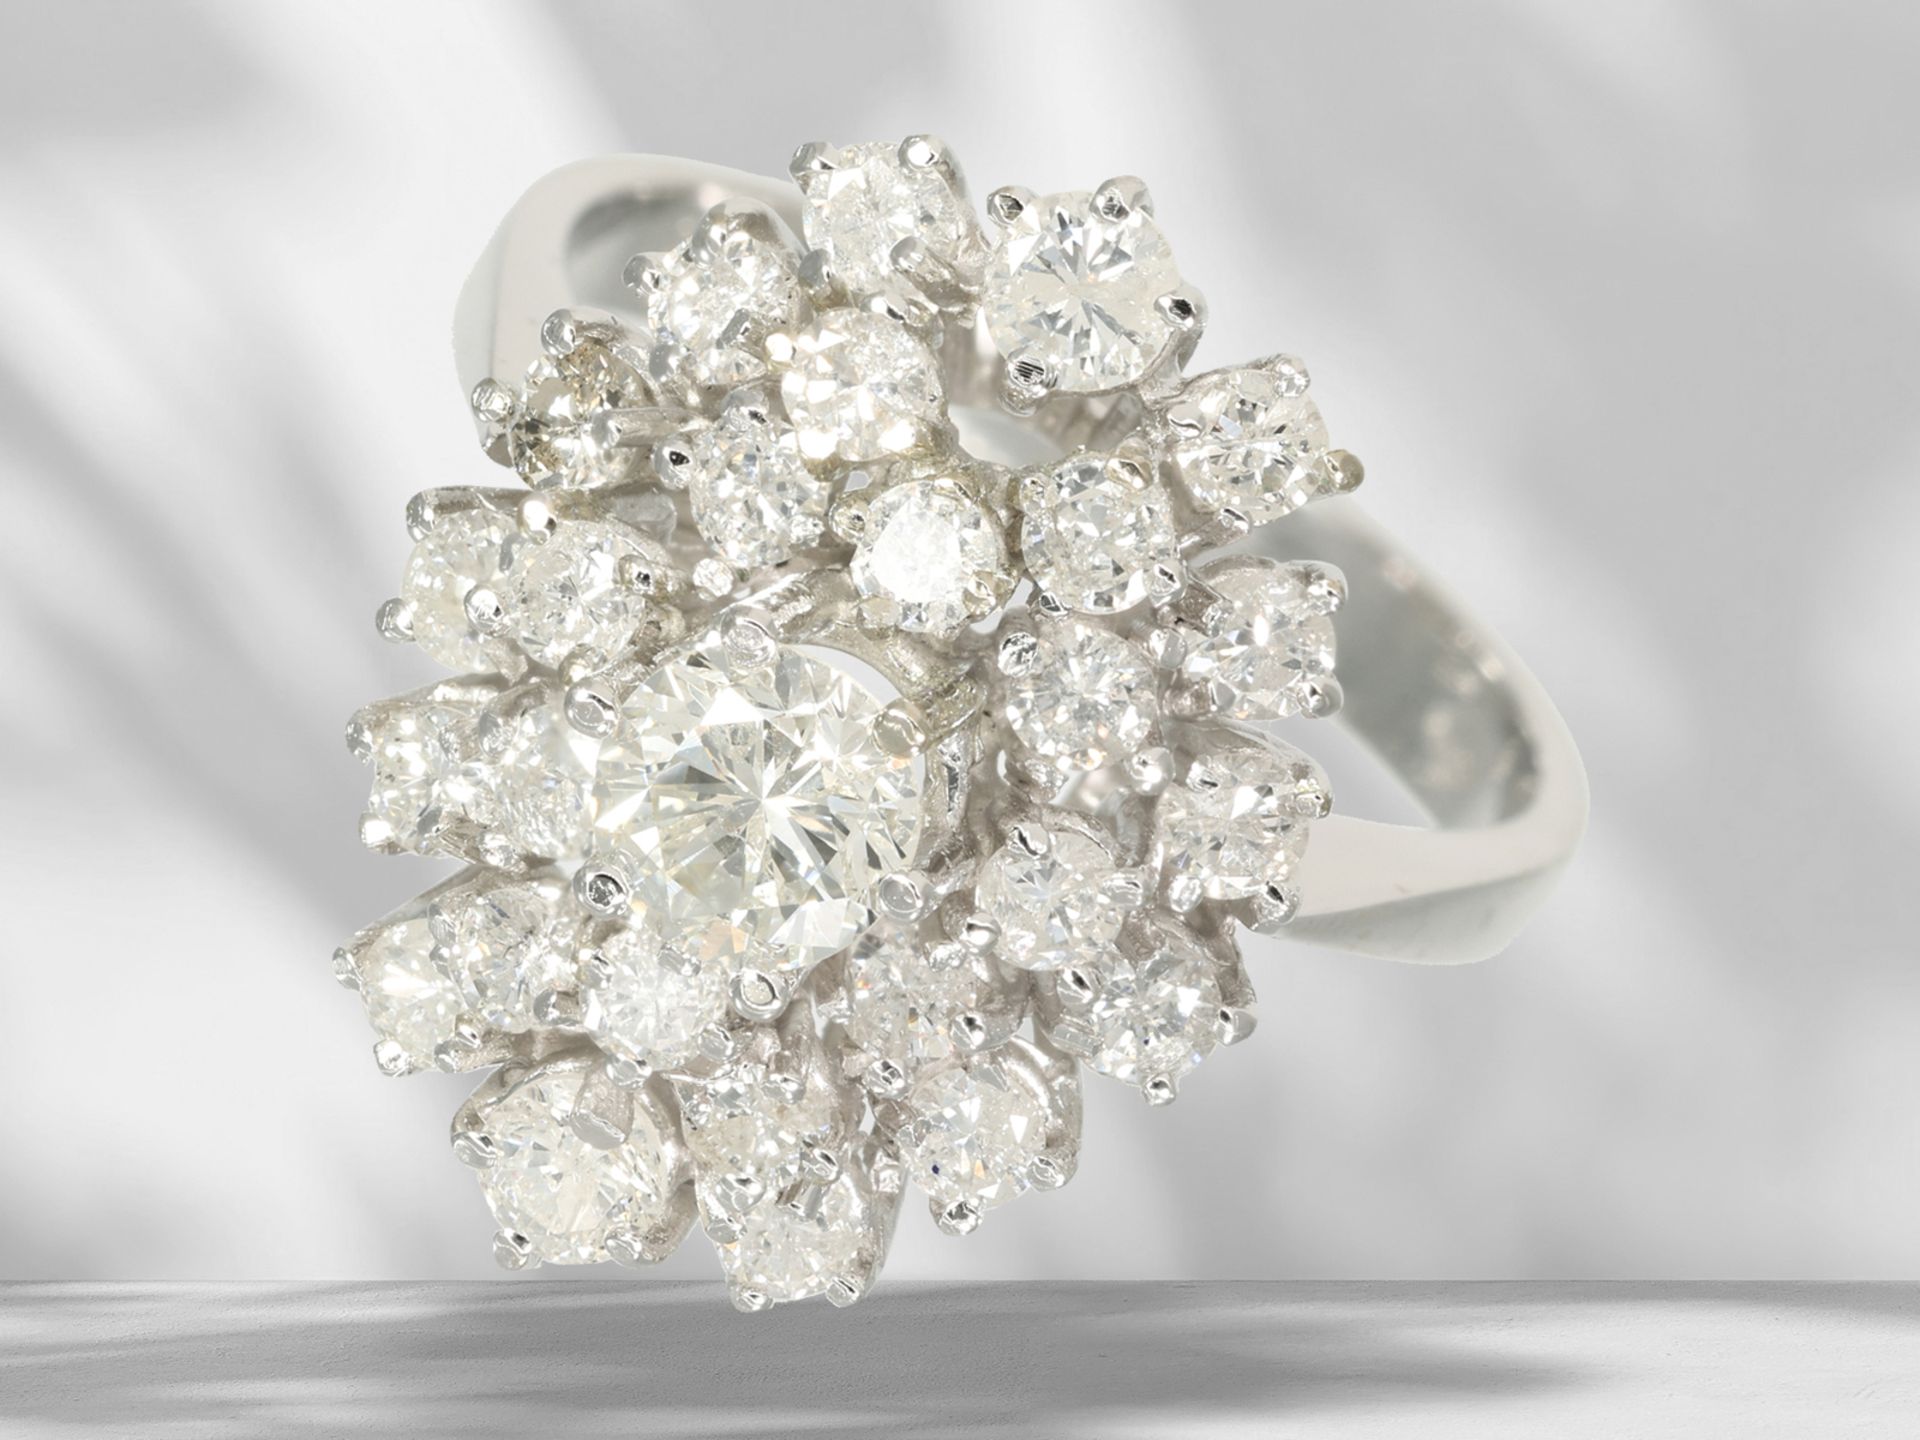 Ring: white gold, decorative vintage brilliant-cut diamond flower ring, approx. 1.8ct brilliant-cut 